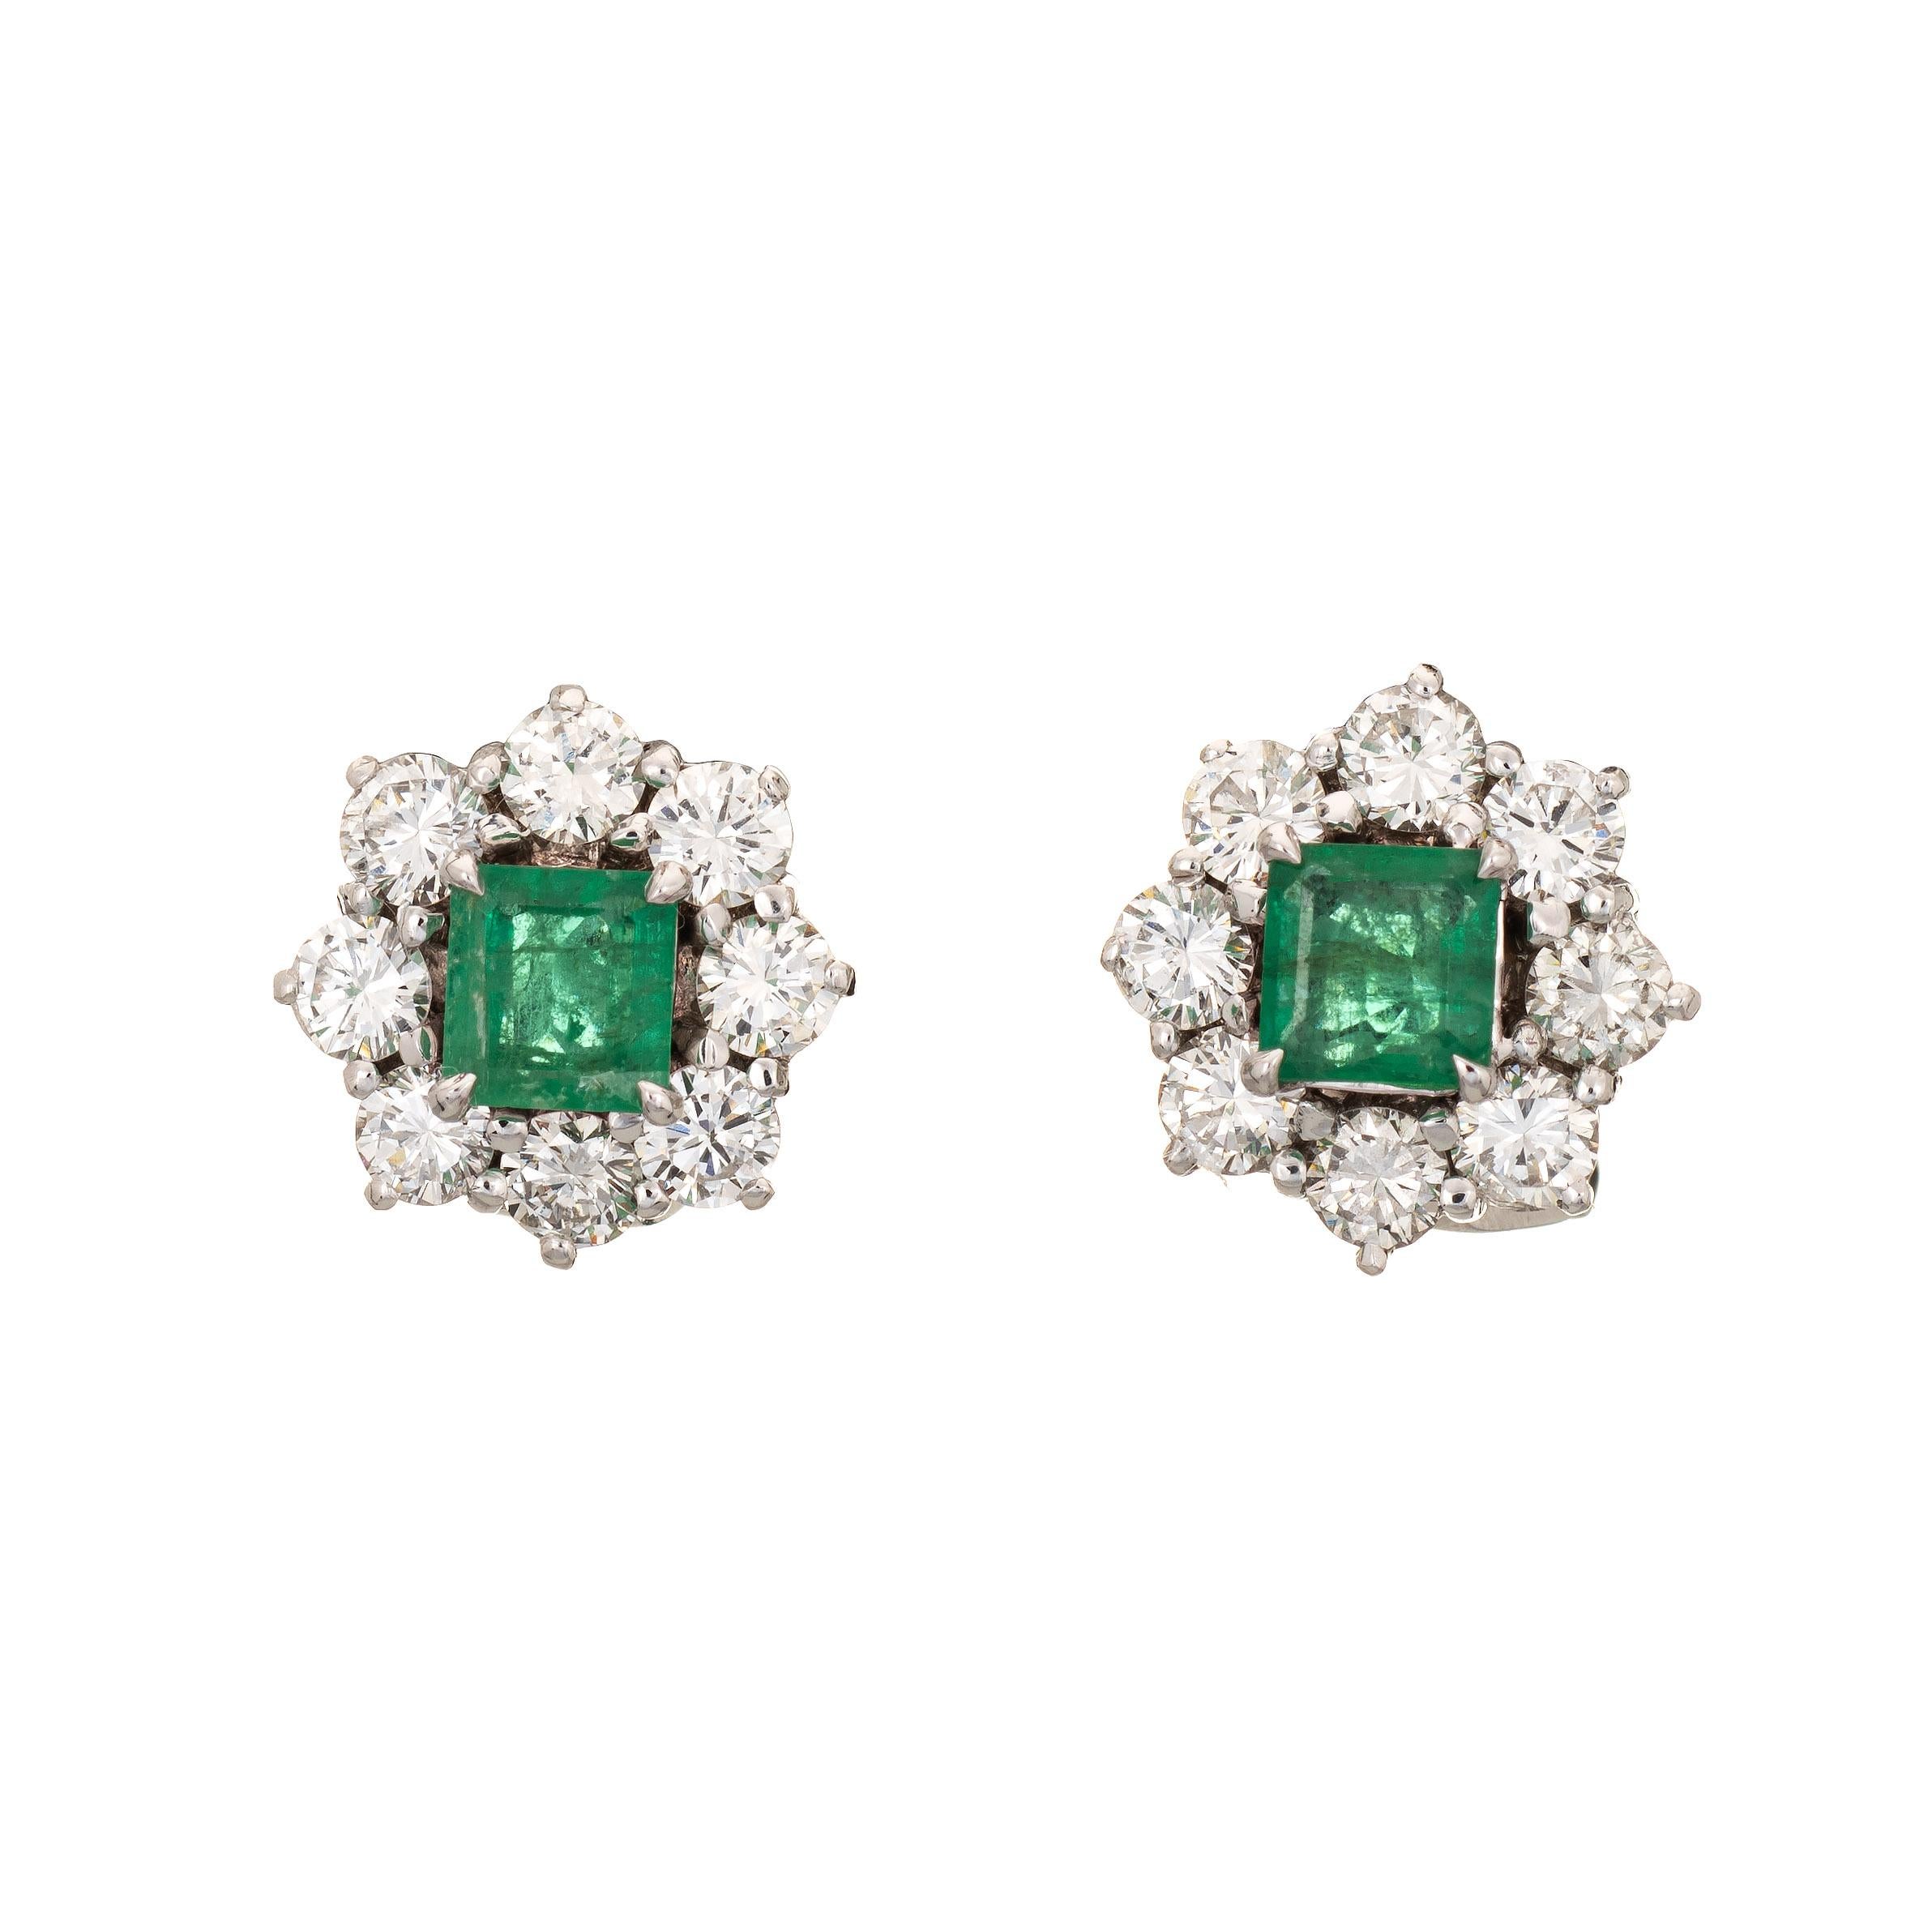 Emerald Cut Emerald 2.50ct Diamond Cluster Earrings Vintage 18k White Gold Estate Jewelry